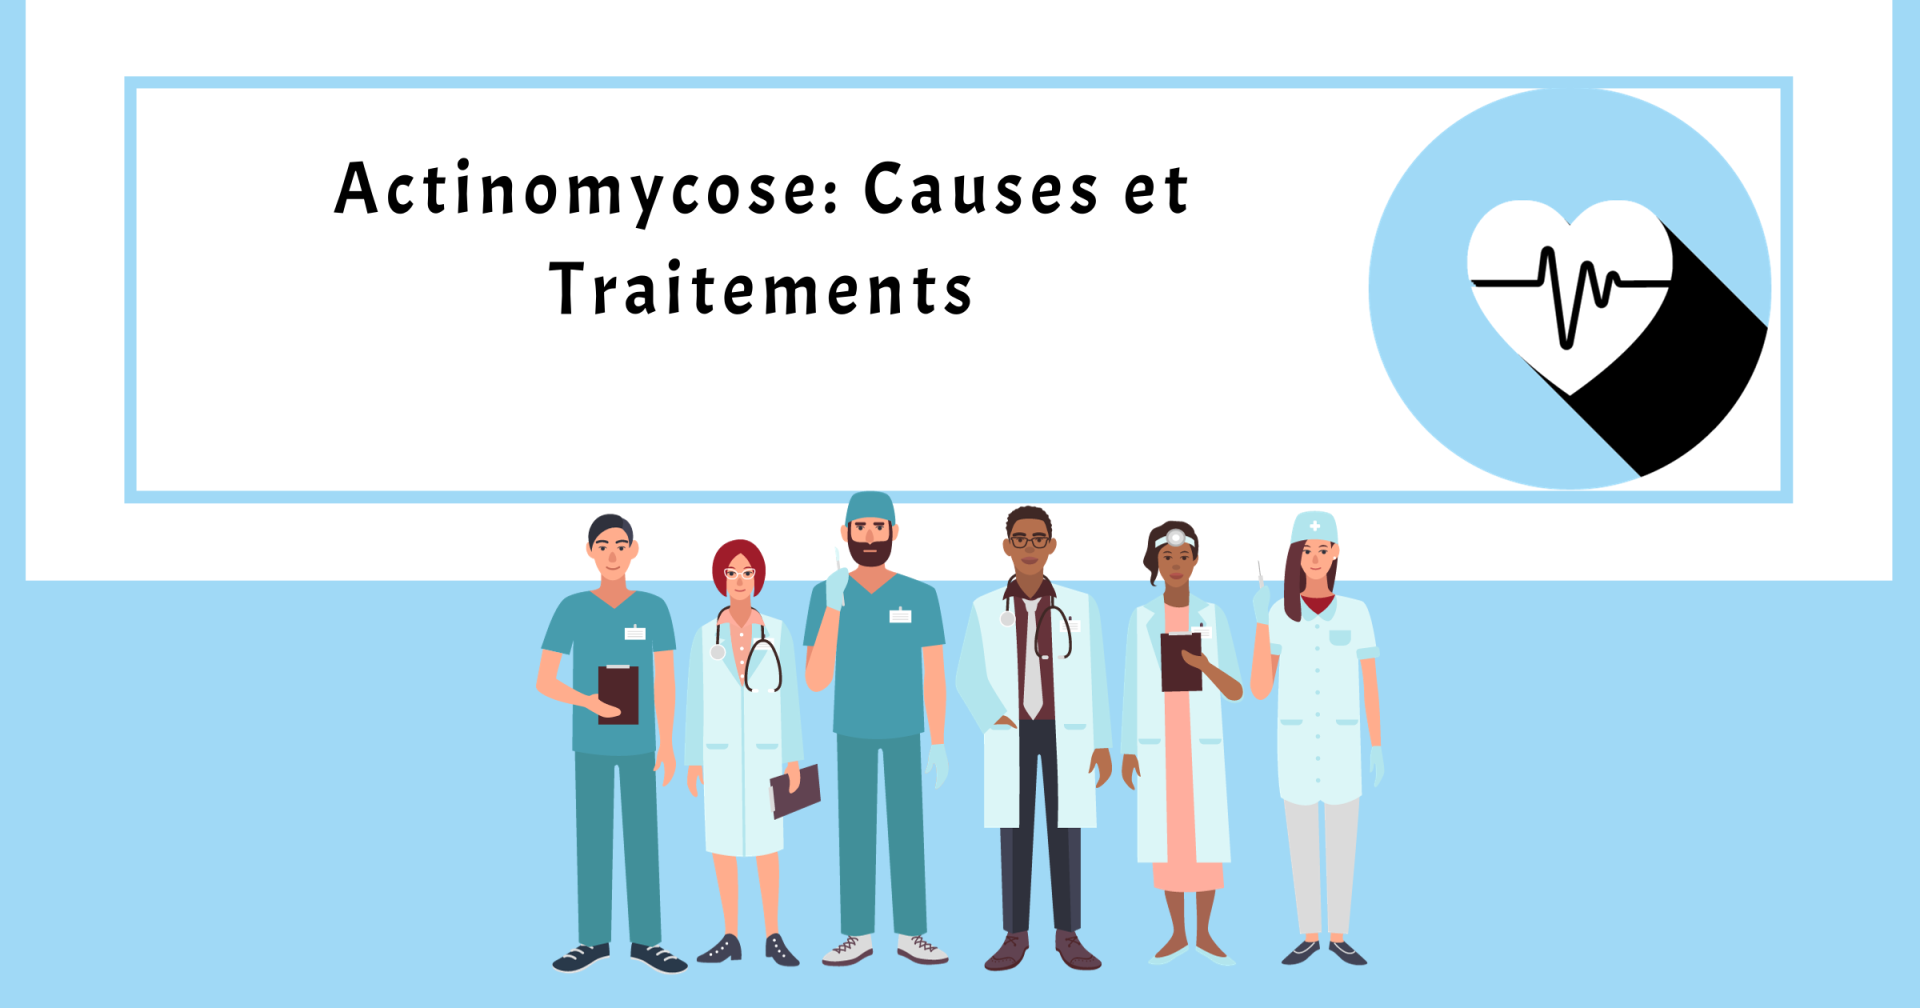 Actinomycose: Causes et Traitements